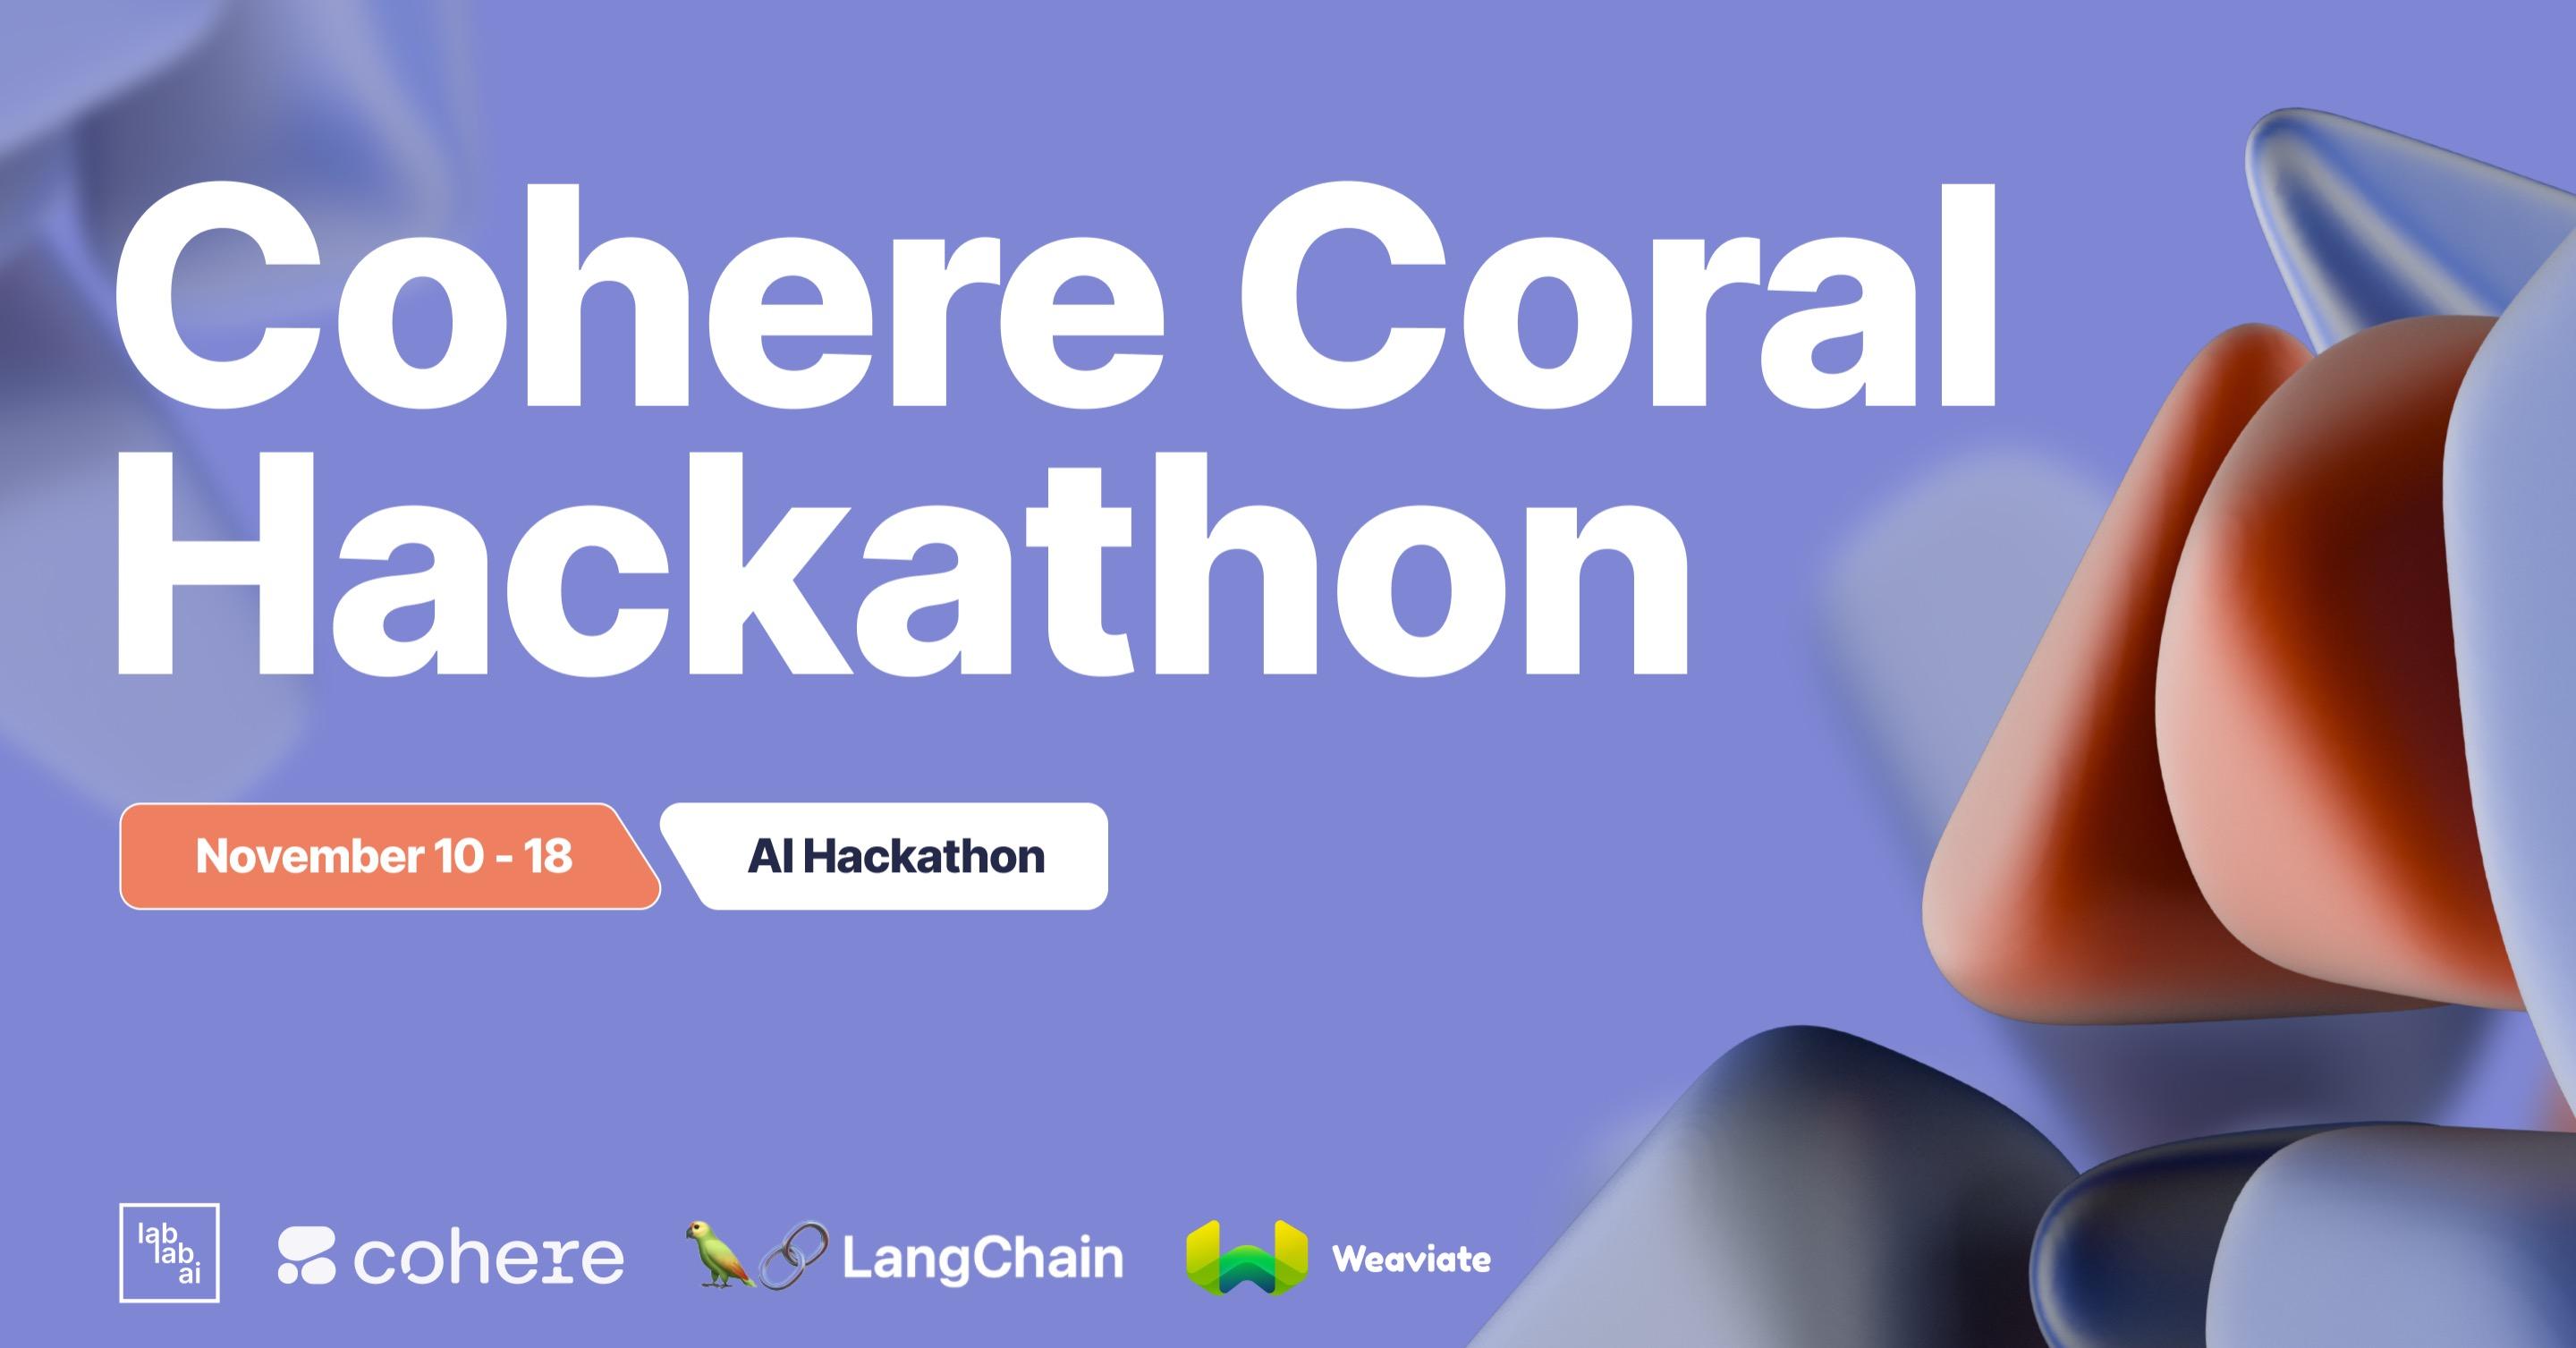 Cohere Coral Hackathon image